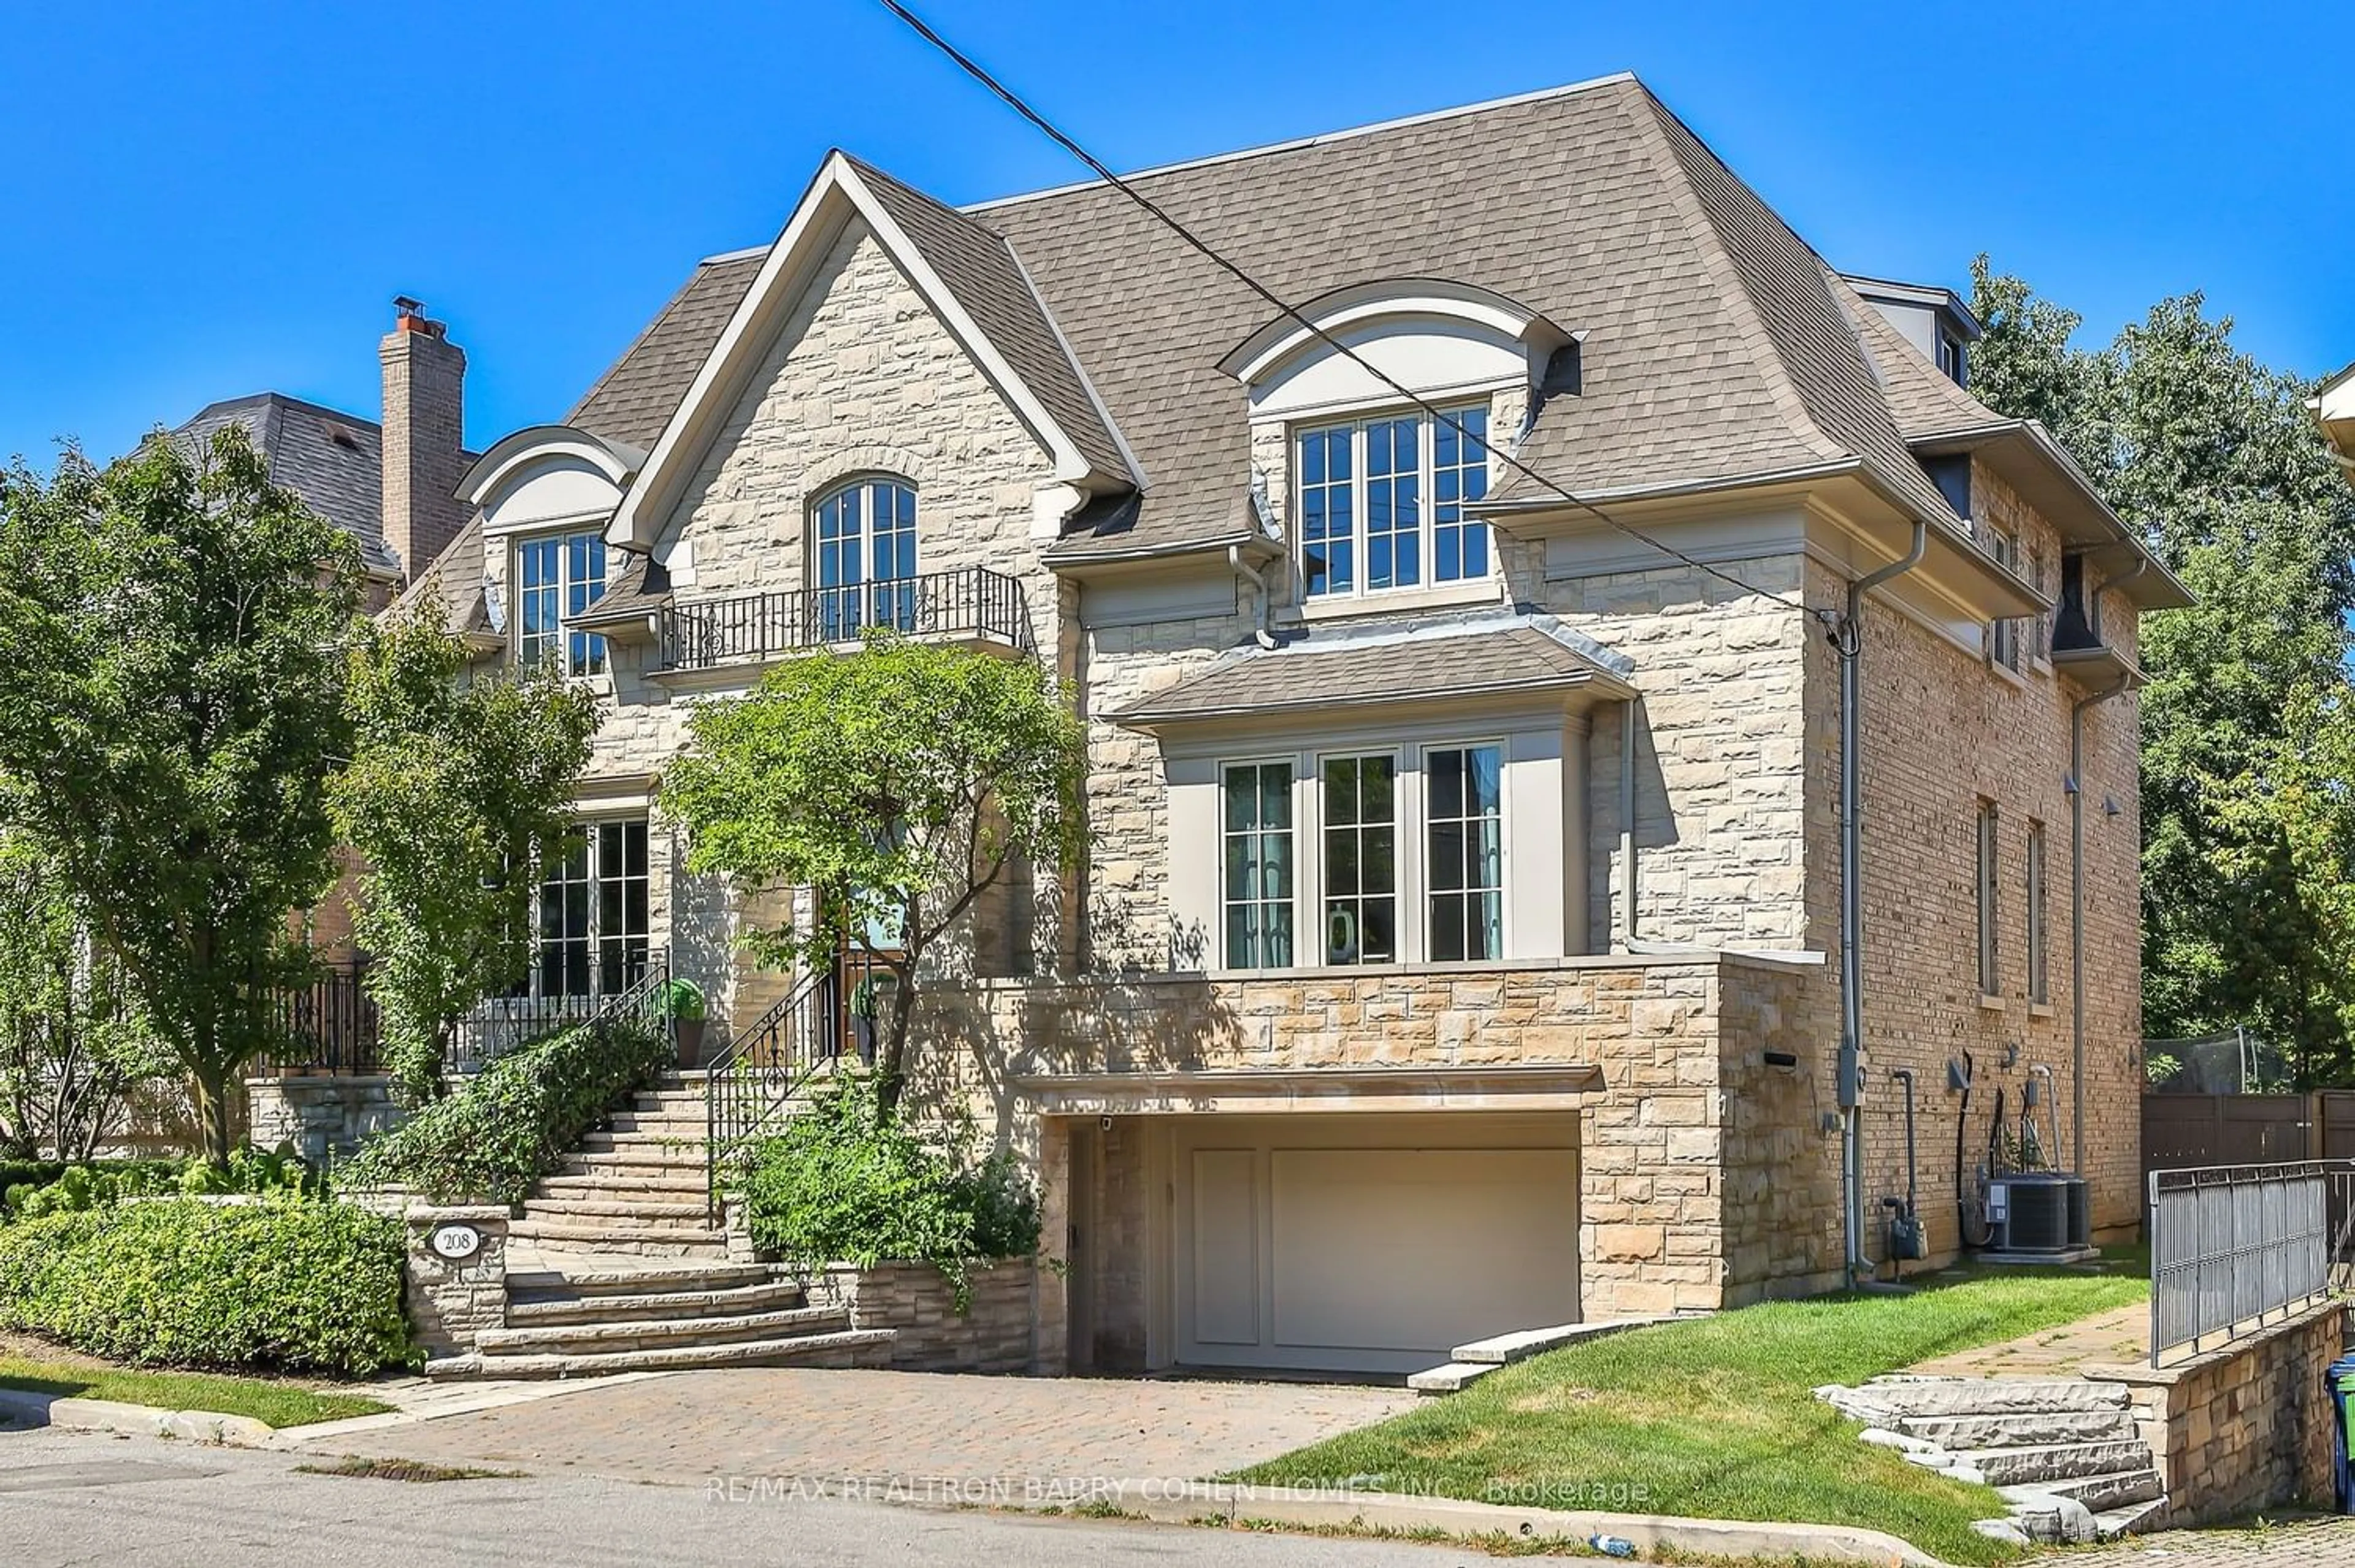 Home with brick exterior material for 208 Carmichael Ave, Toronto Ontario M5M 2X3